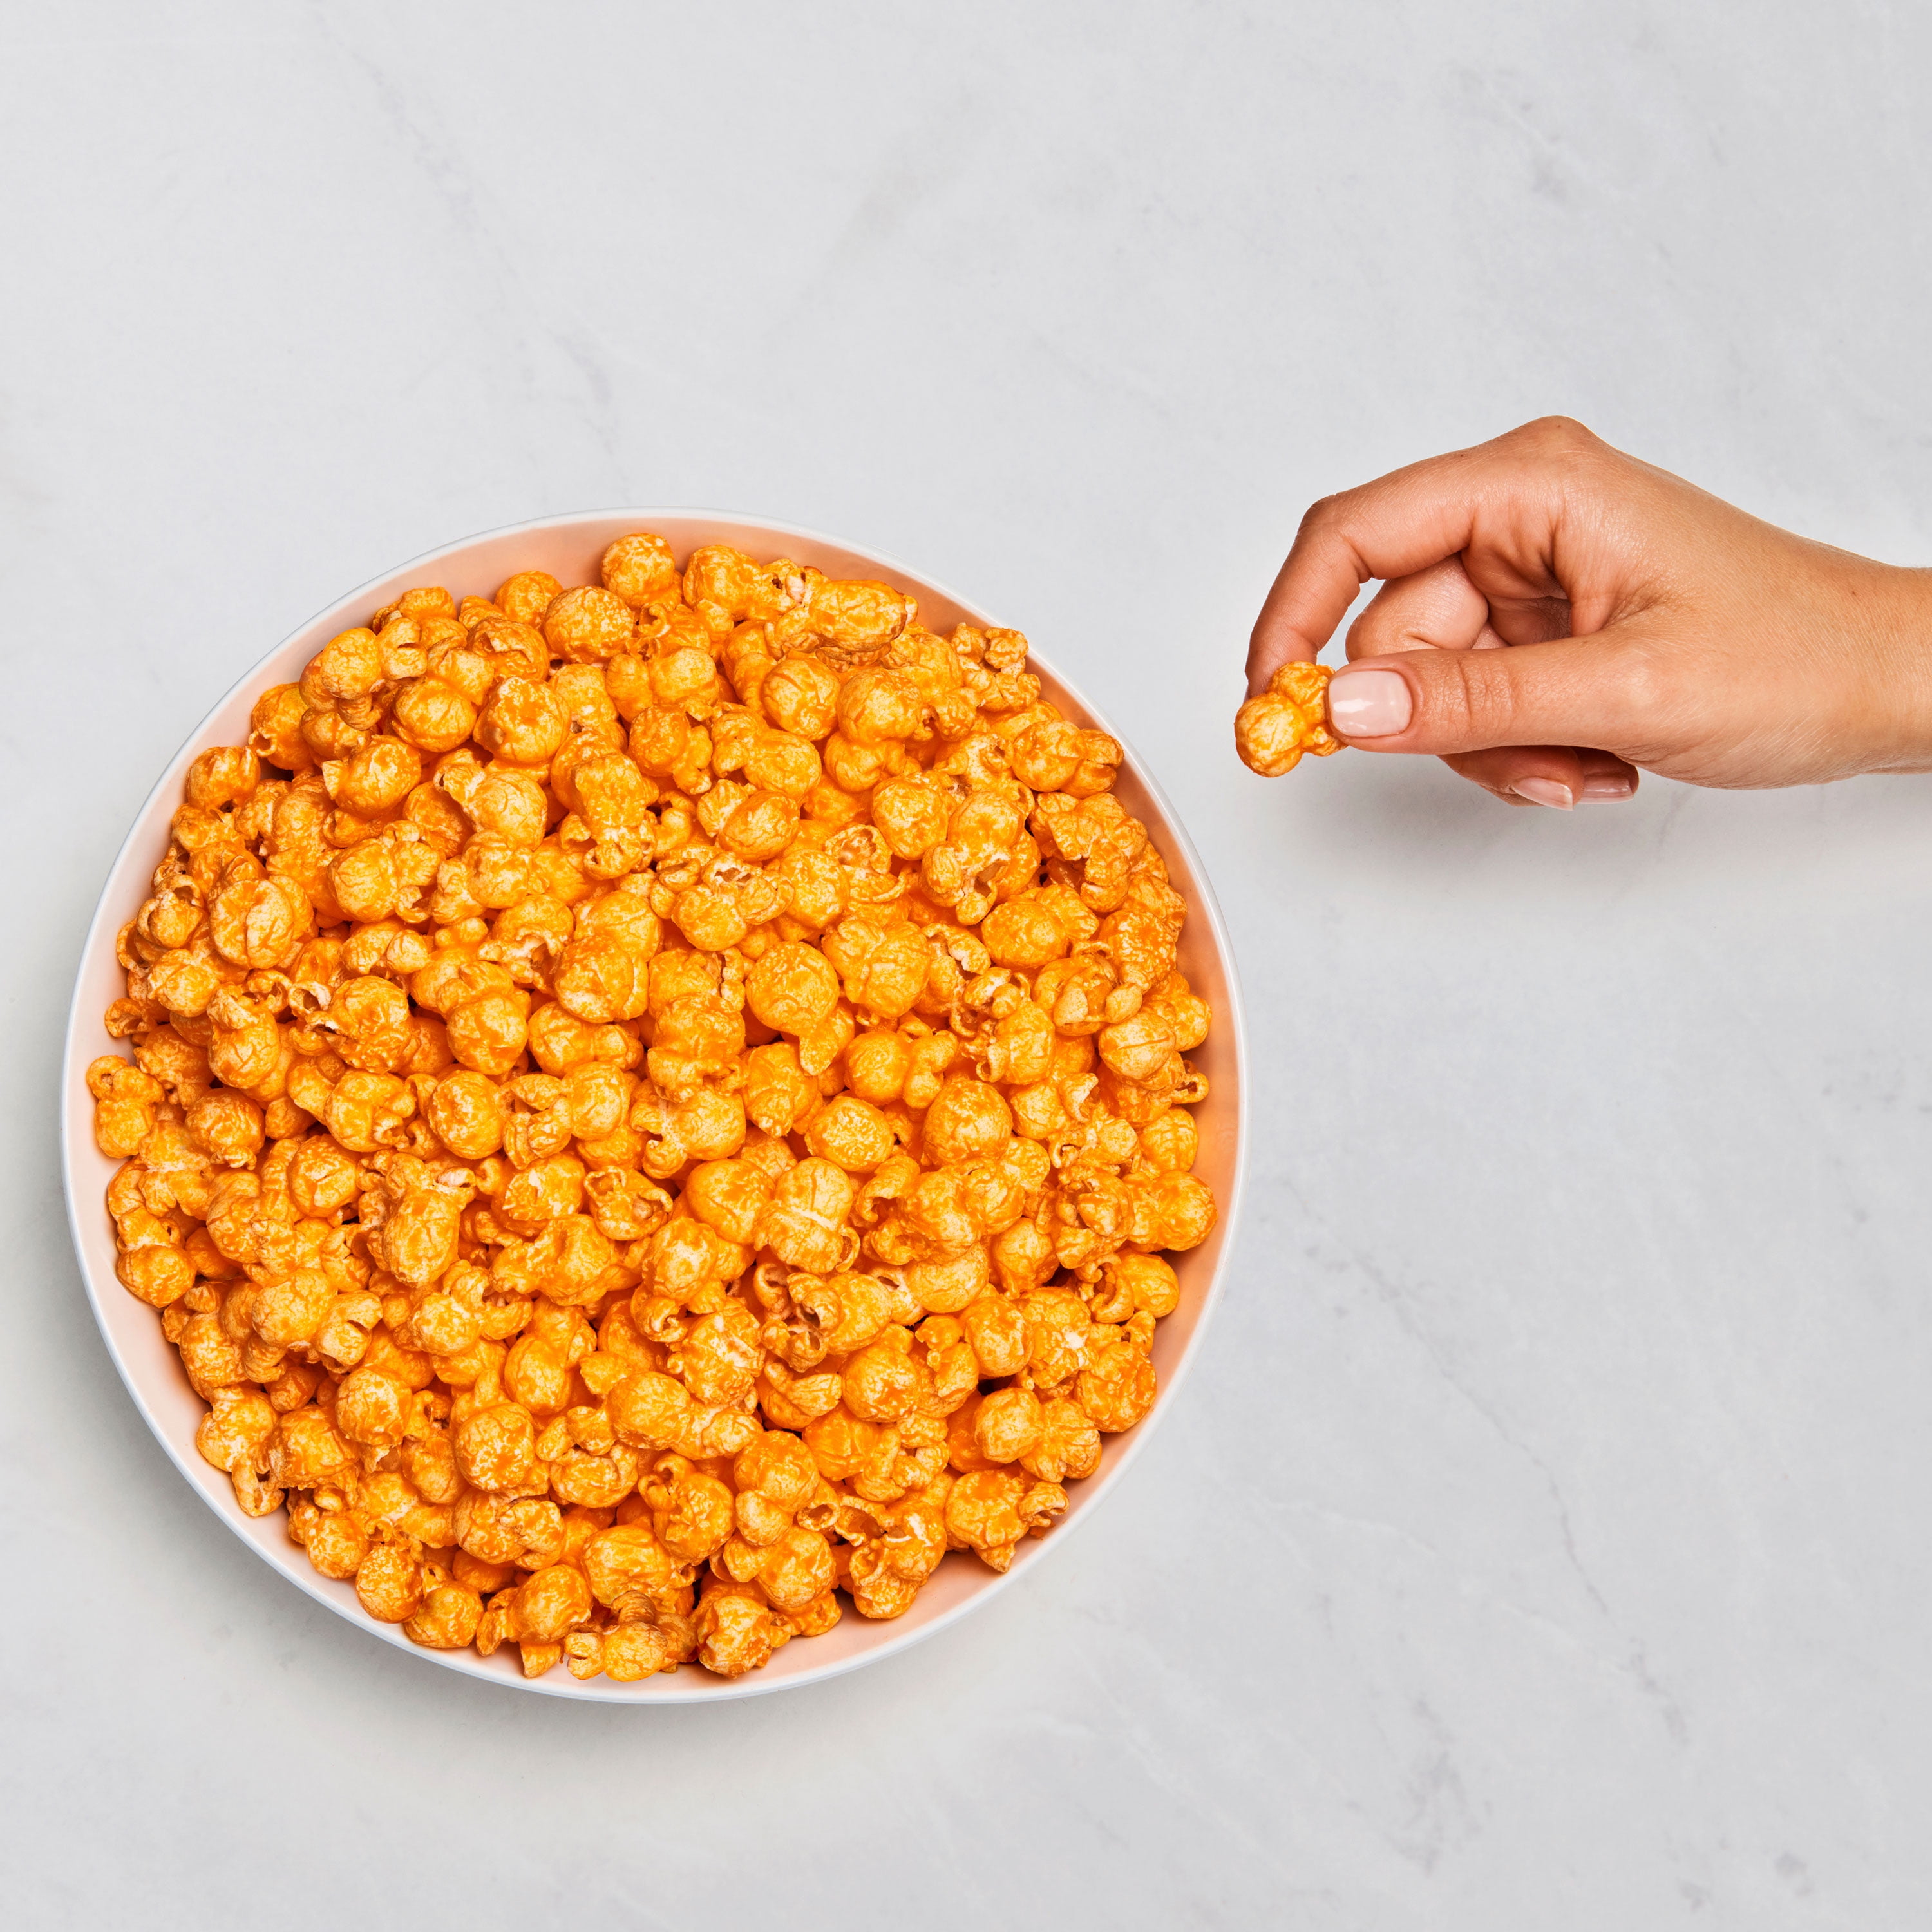 Cheetos Cheddar Cheese Flavored Popcorn, 7 oz - Kroger